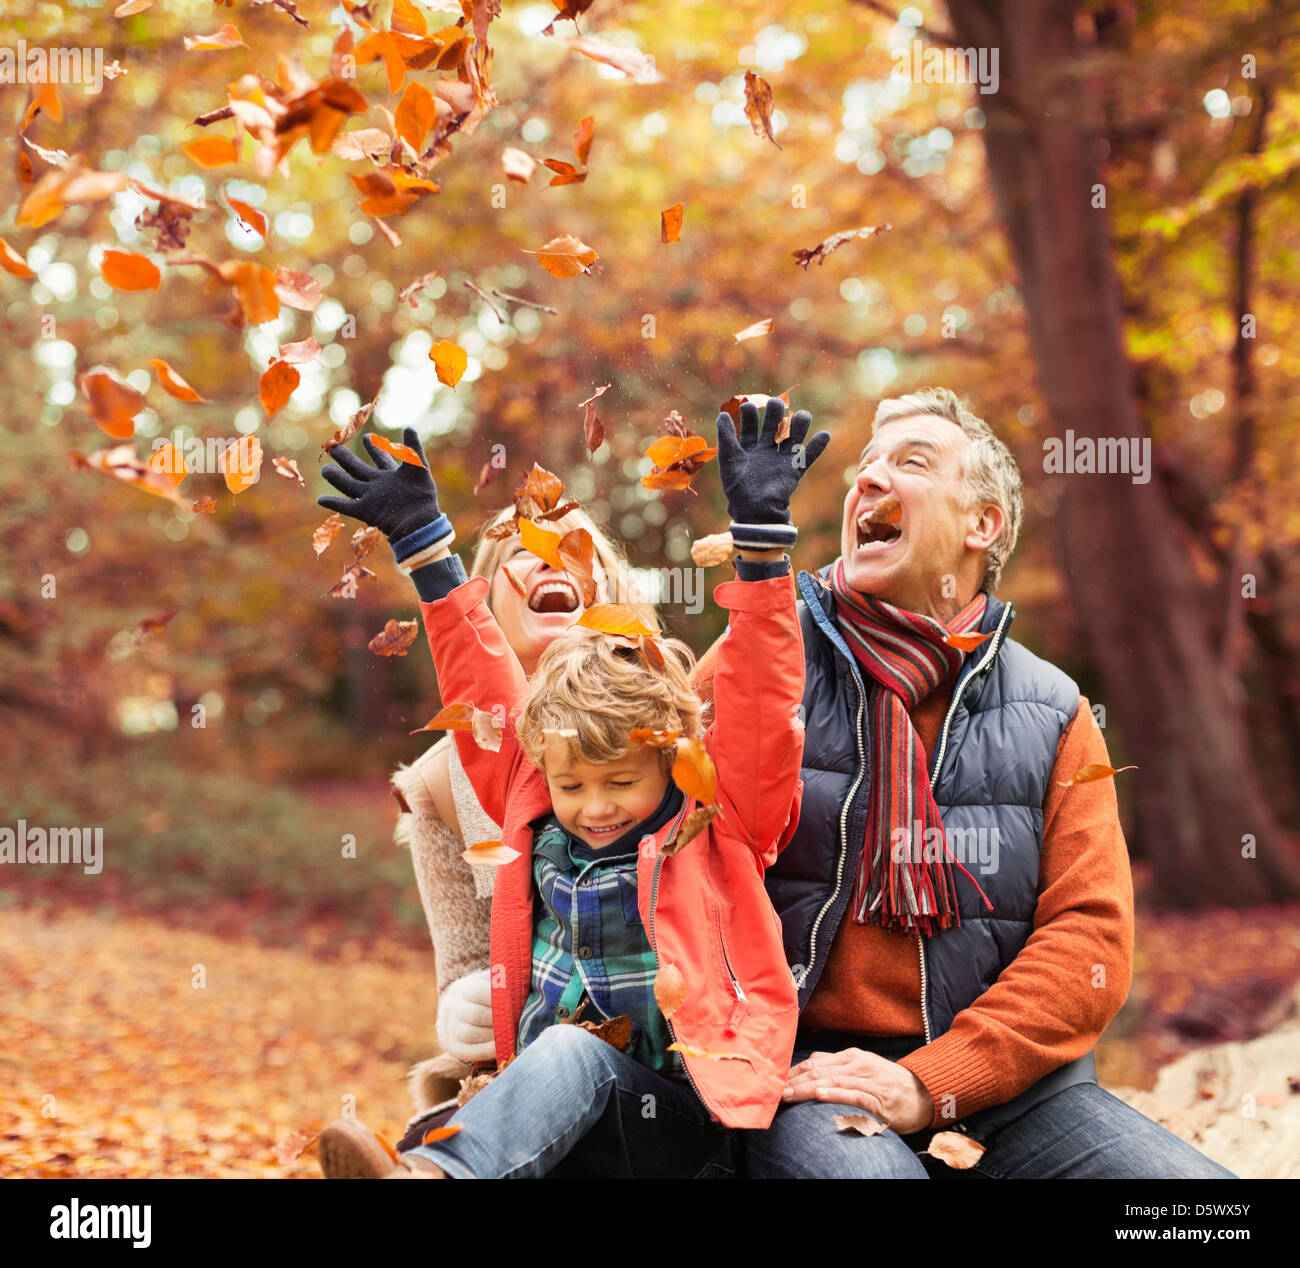 Älteres Ehepaar mit Enkel im Herbstlaub spielen Stockfoto